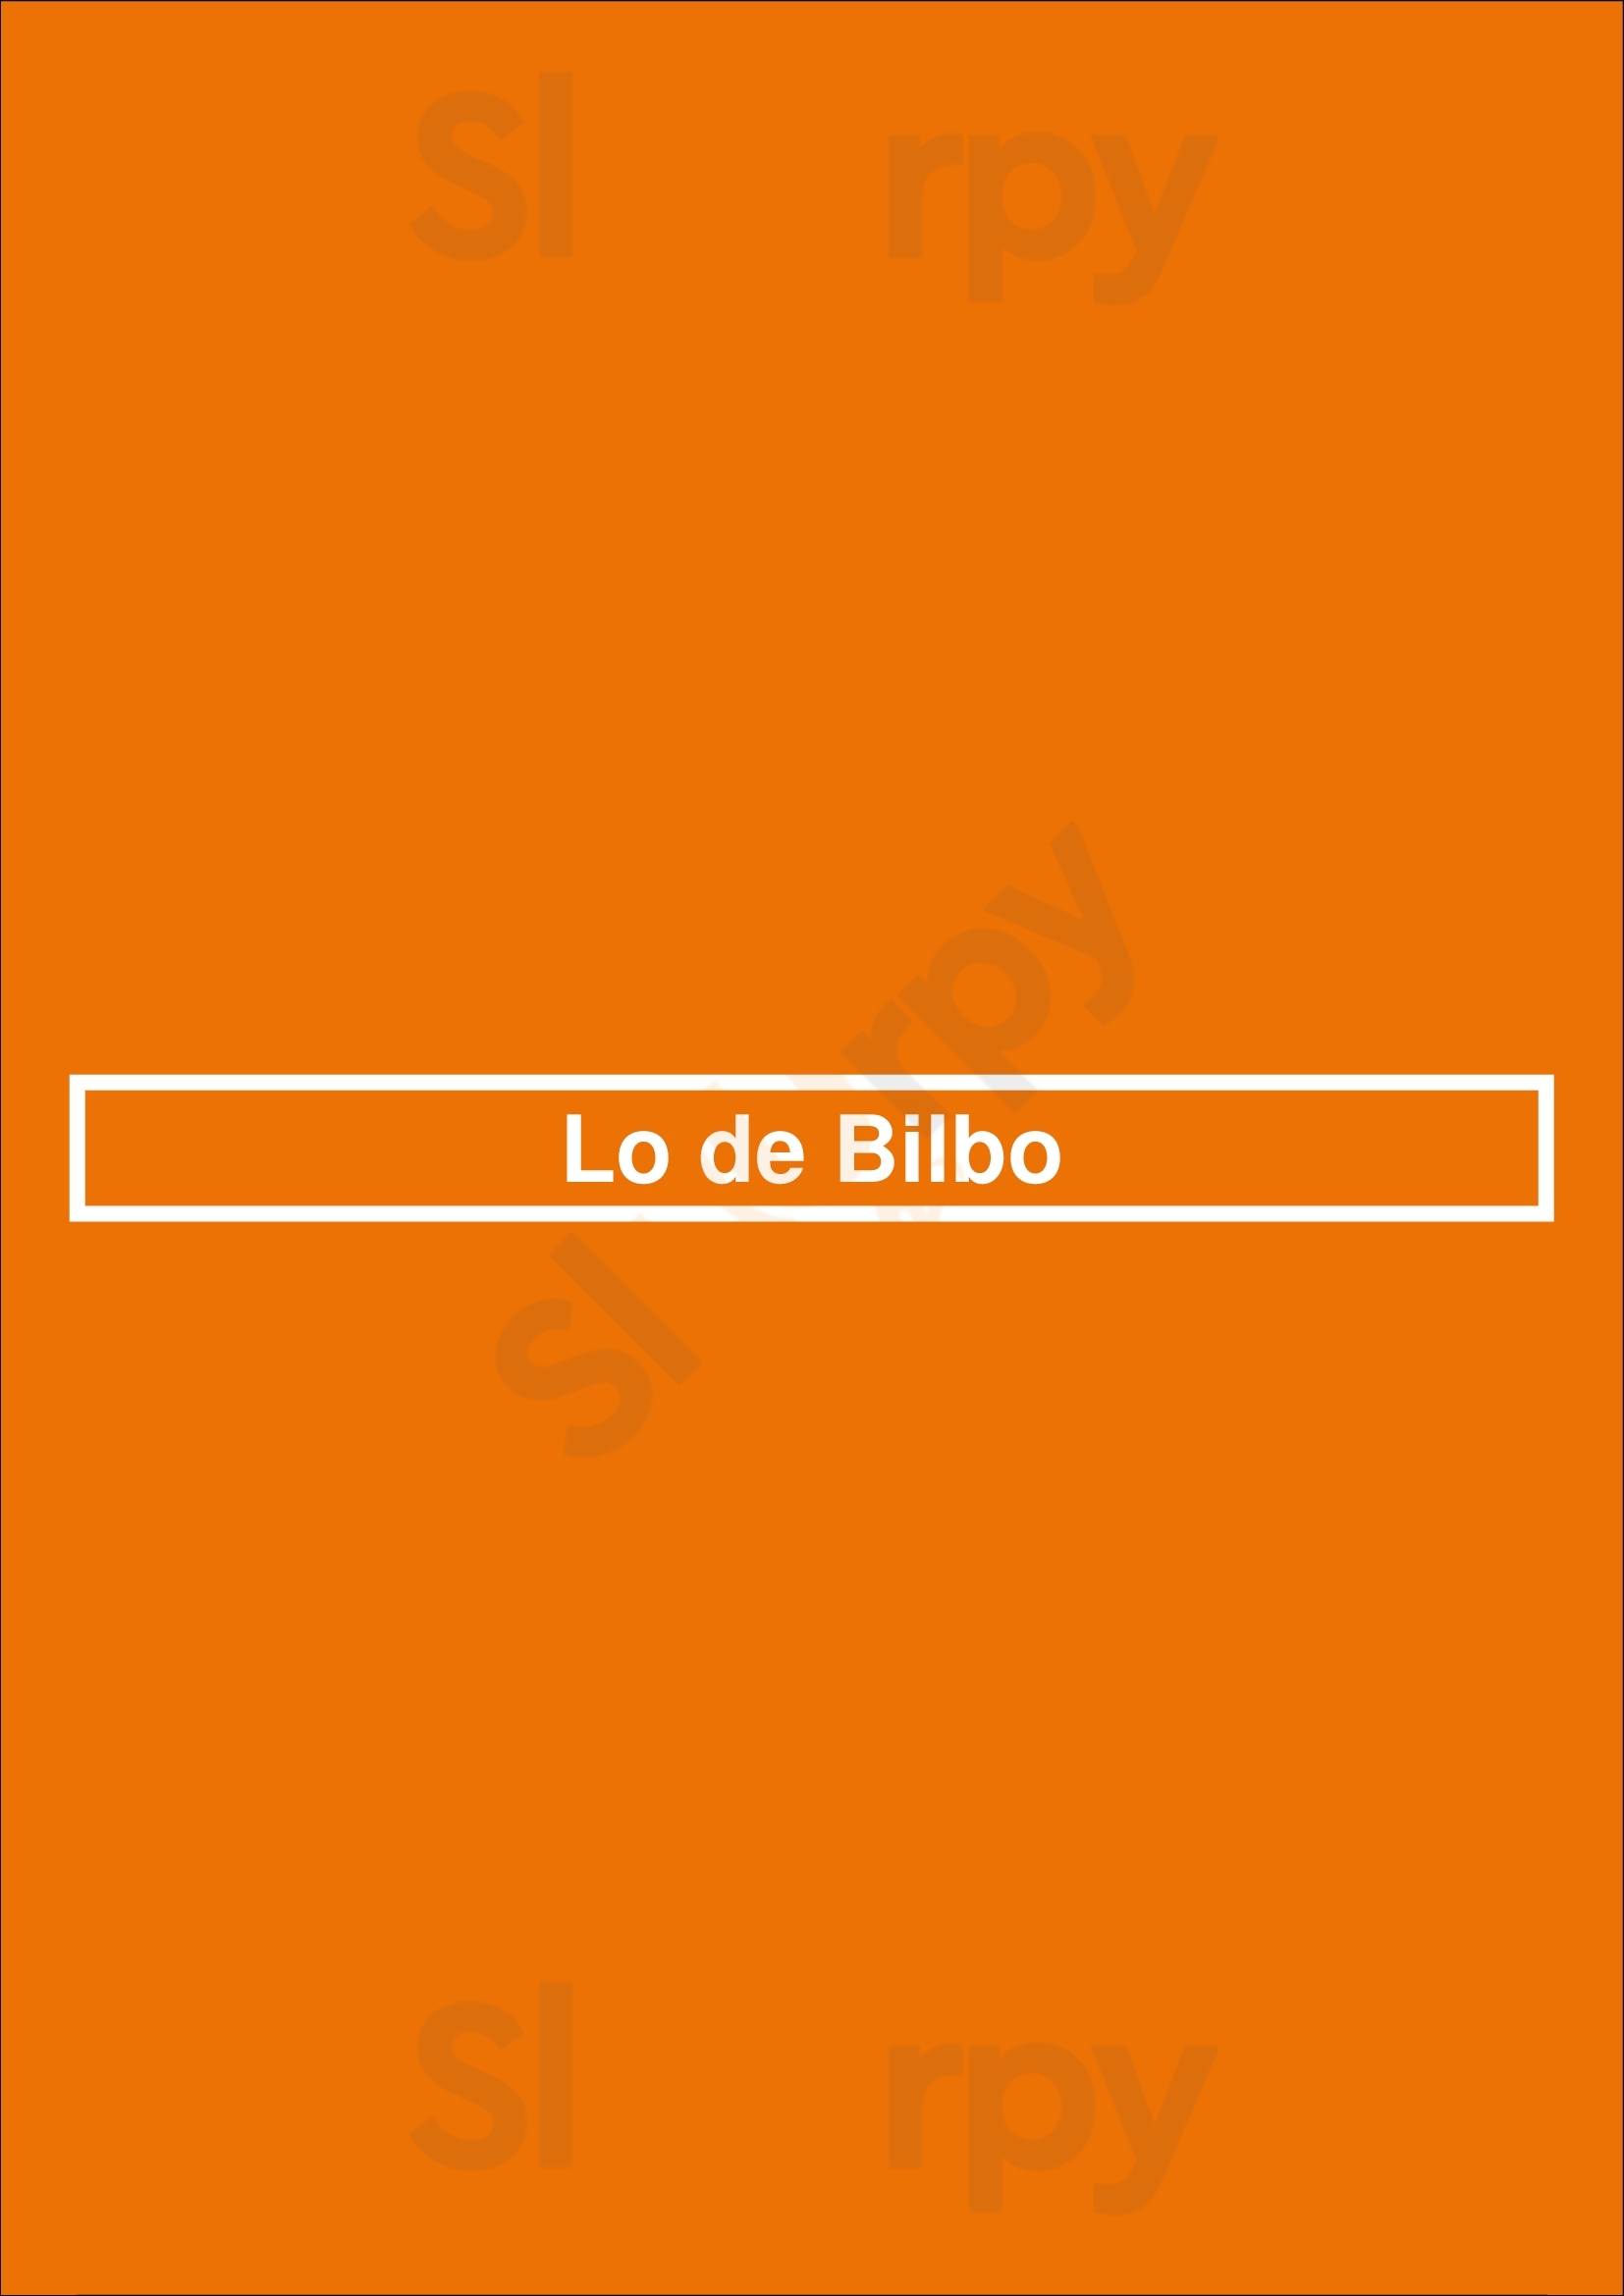 Lo De Bilbo Villa Ballester Menu - 1